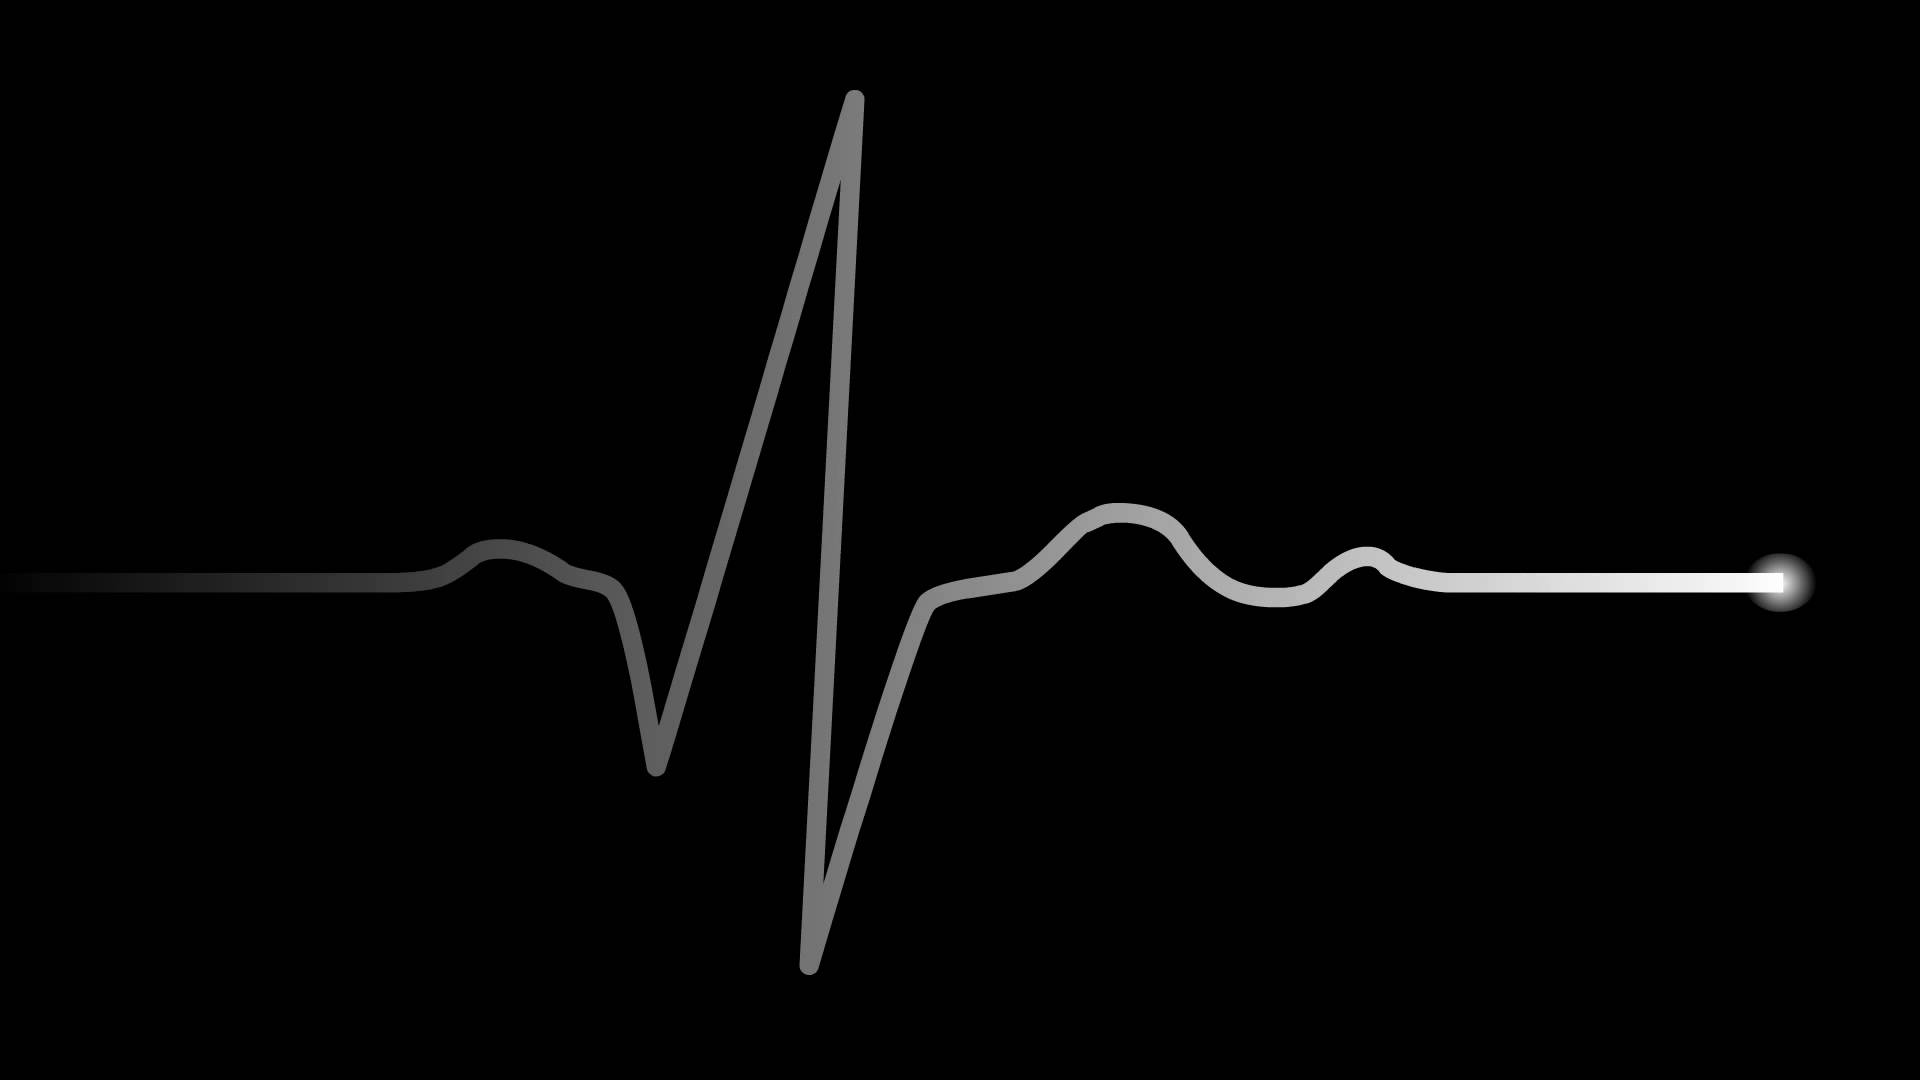 Heartbeat Monitor Background